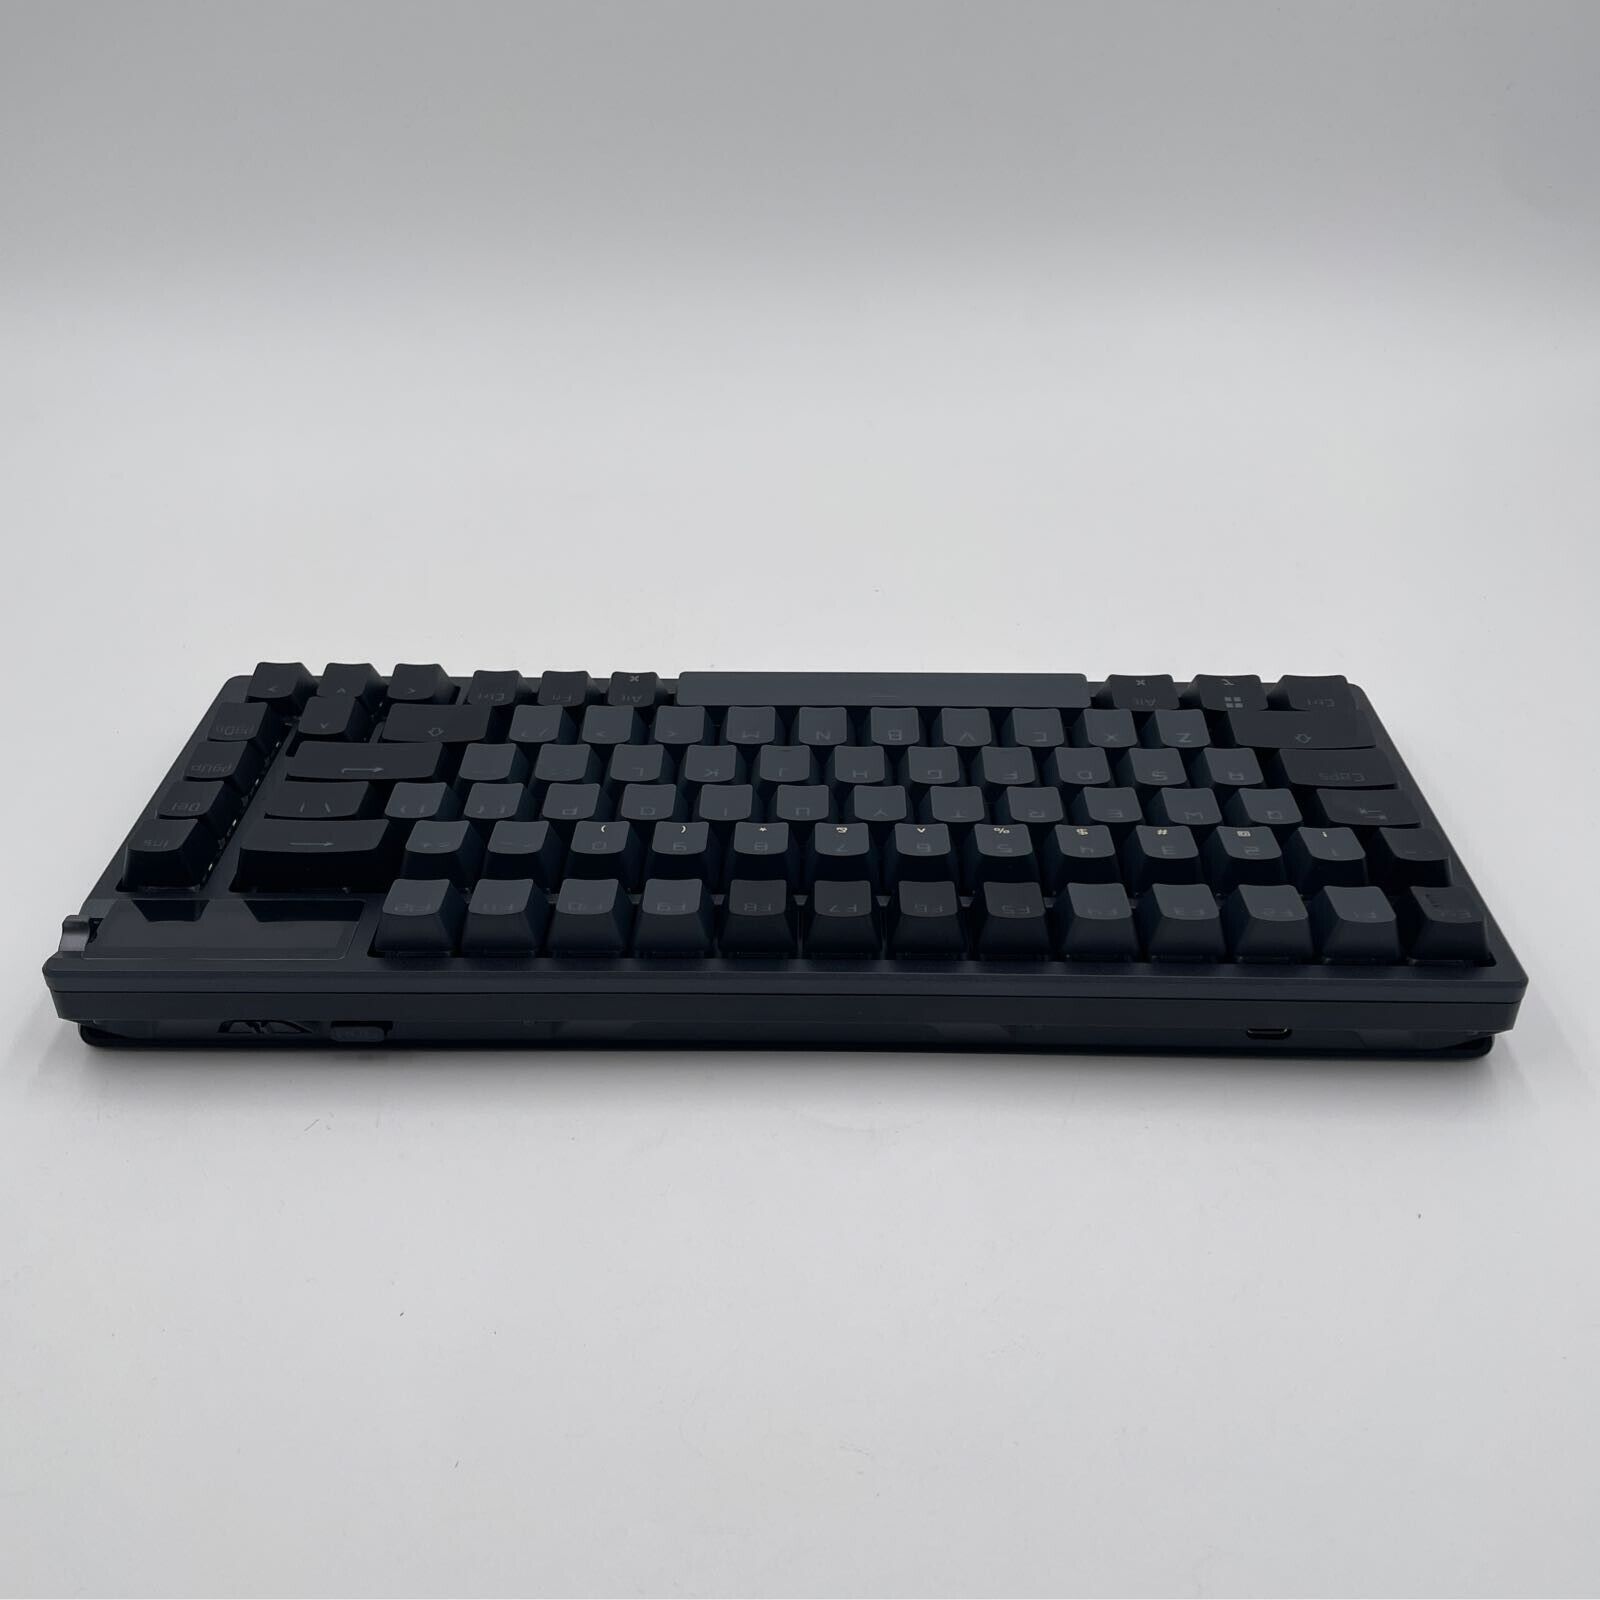 ASUS ROG Azoth 75% Wireless DIY Custom Gaming Keyboard Red Switches - Black